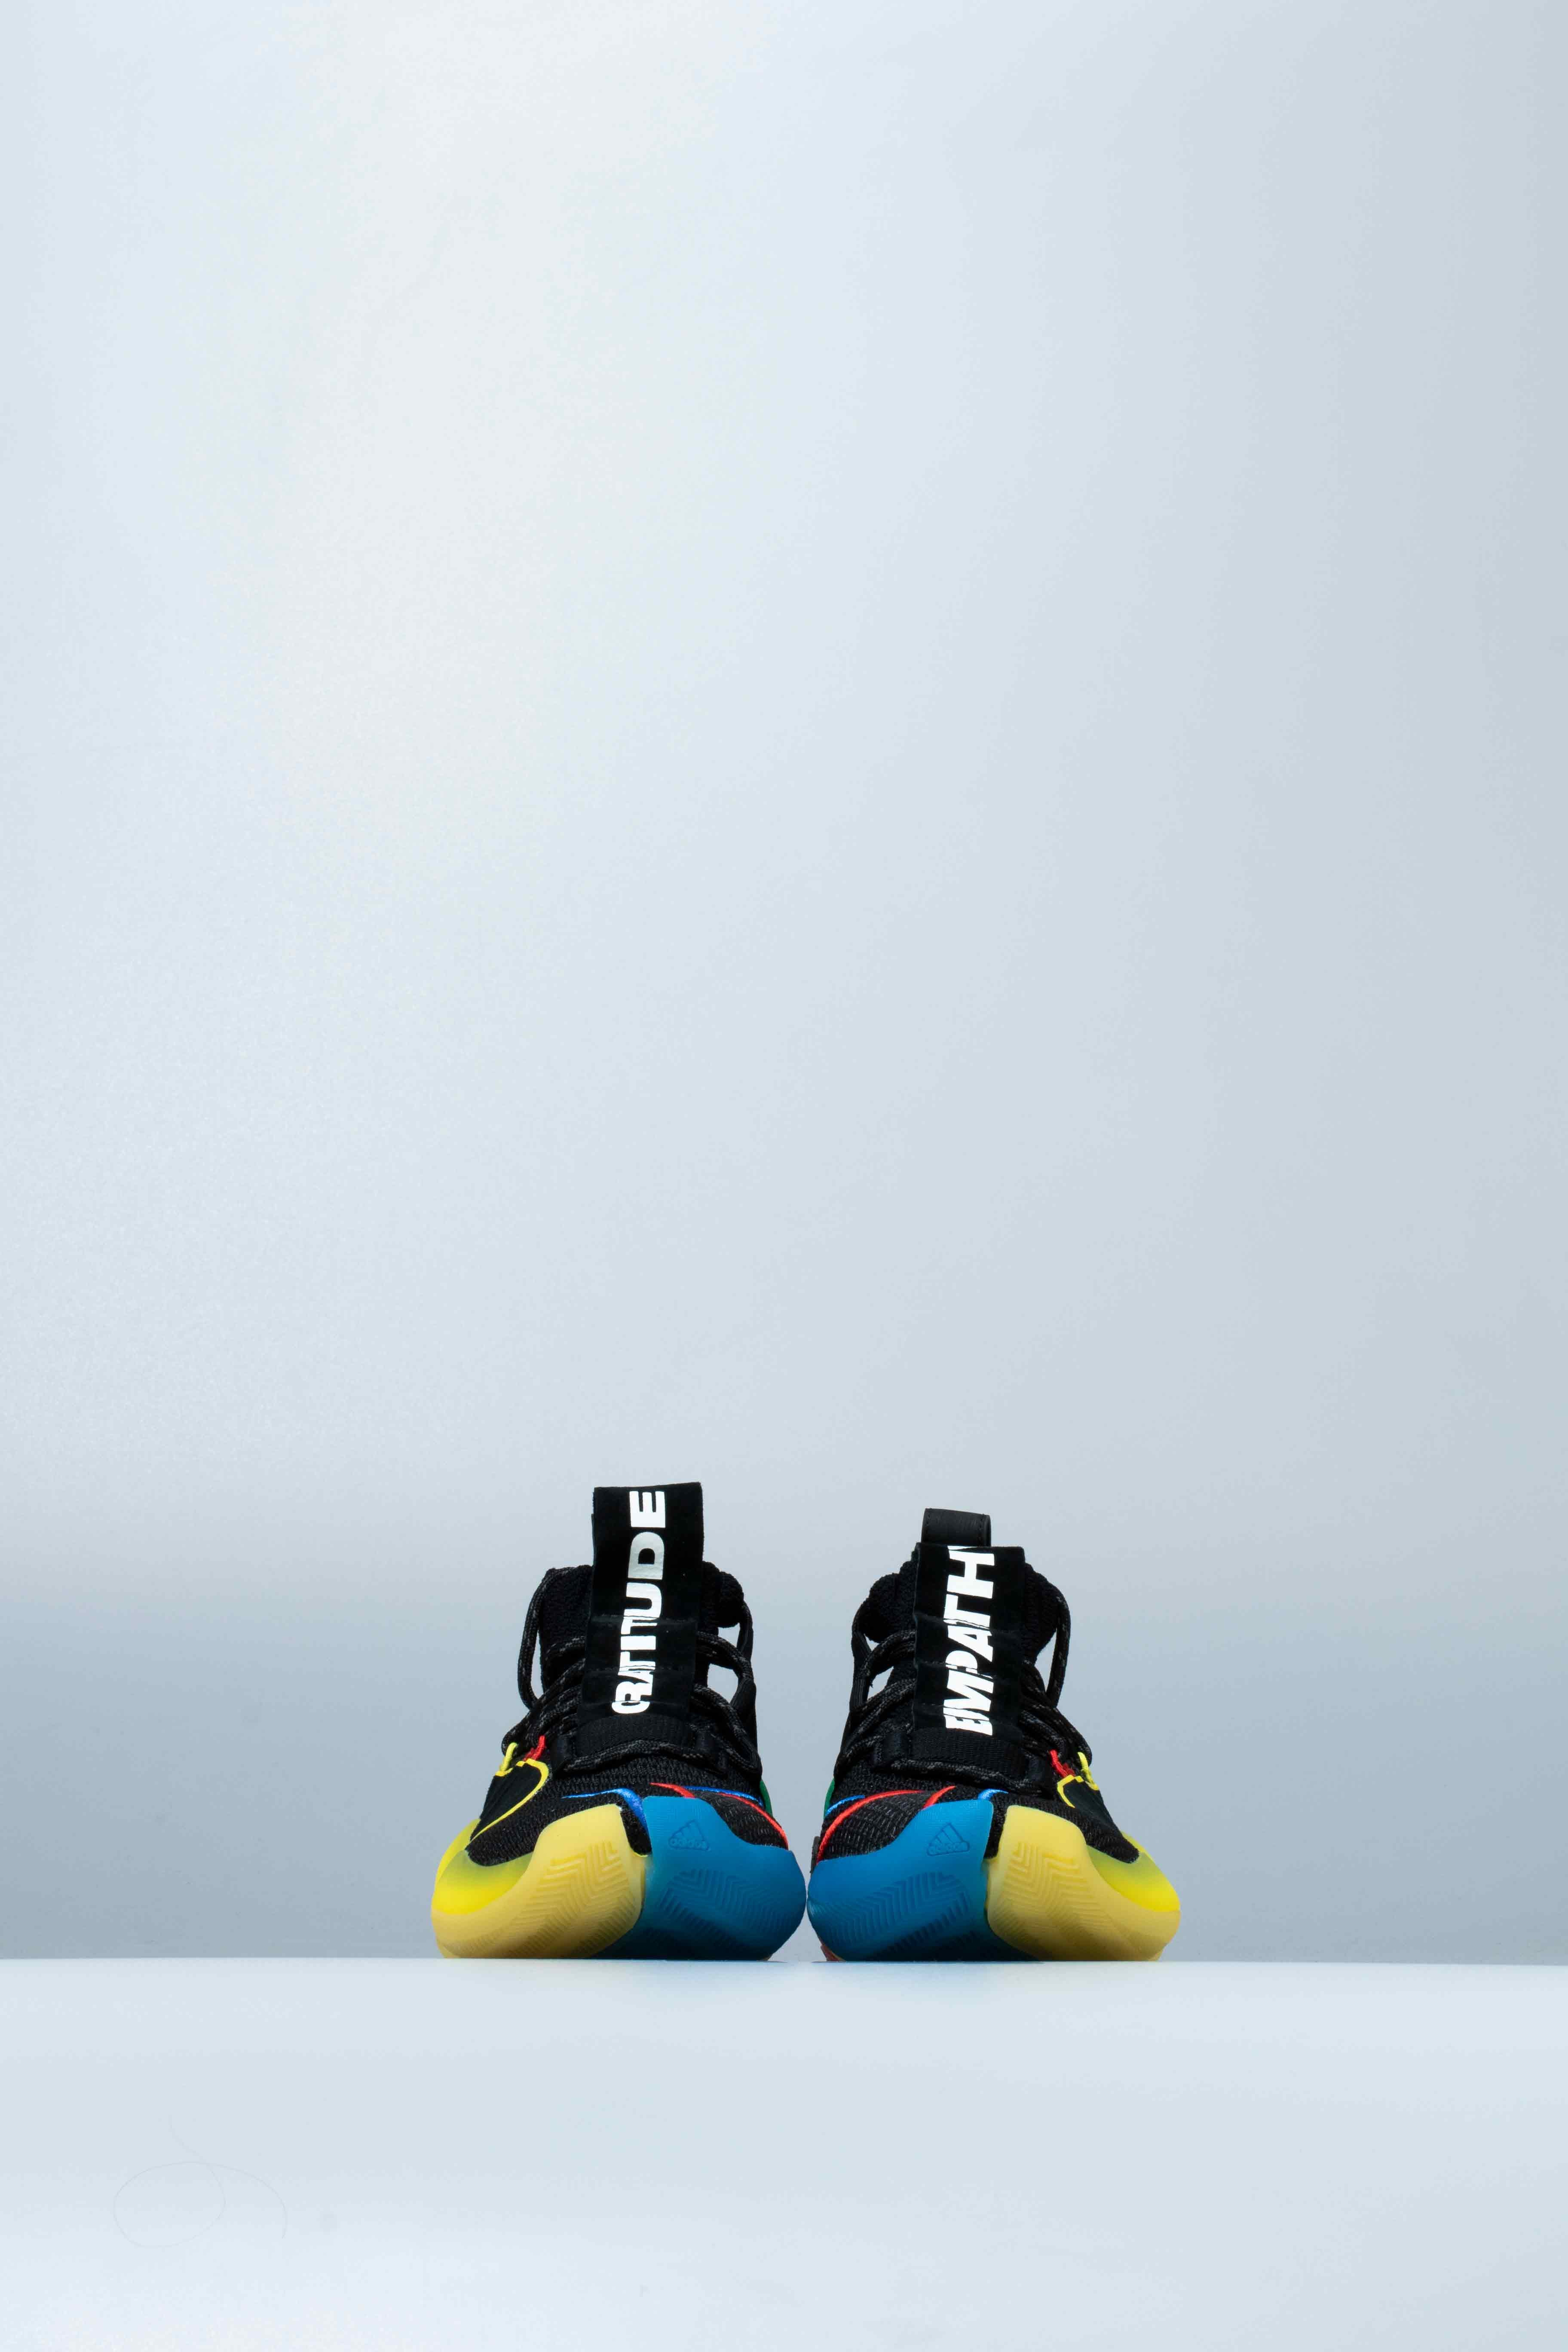 Adidas Consortium Pharrell Williams Crazy BYW x Gratitude Empathy Mens Shoe 